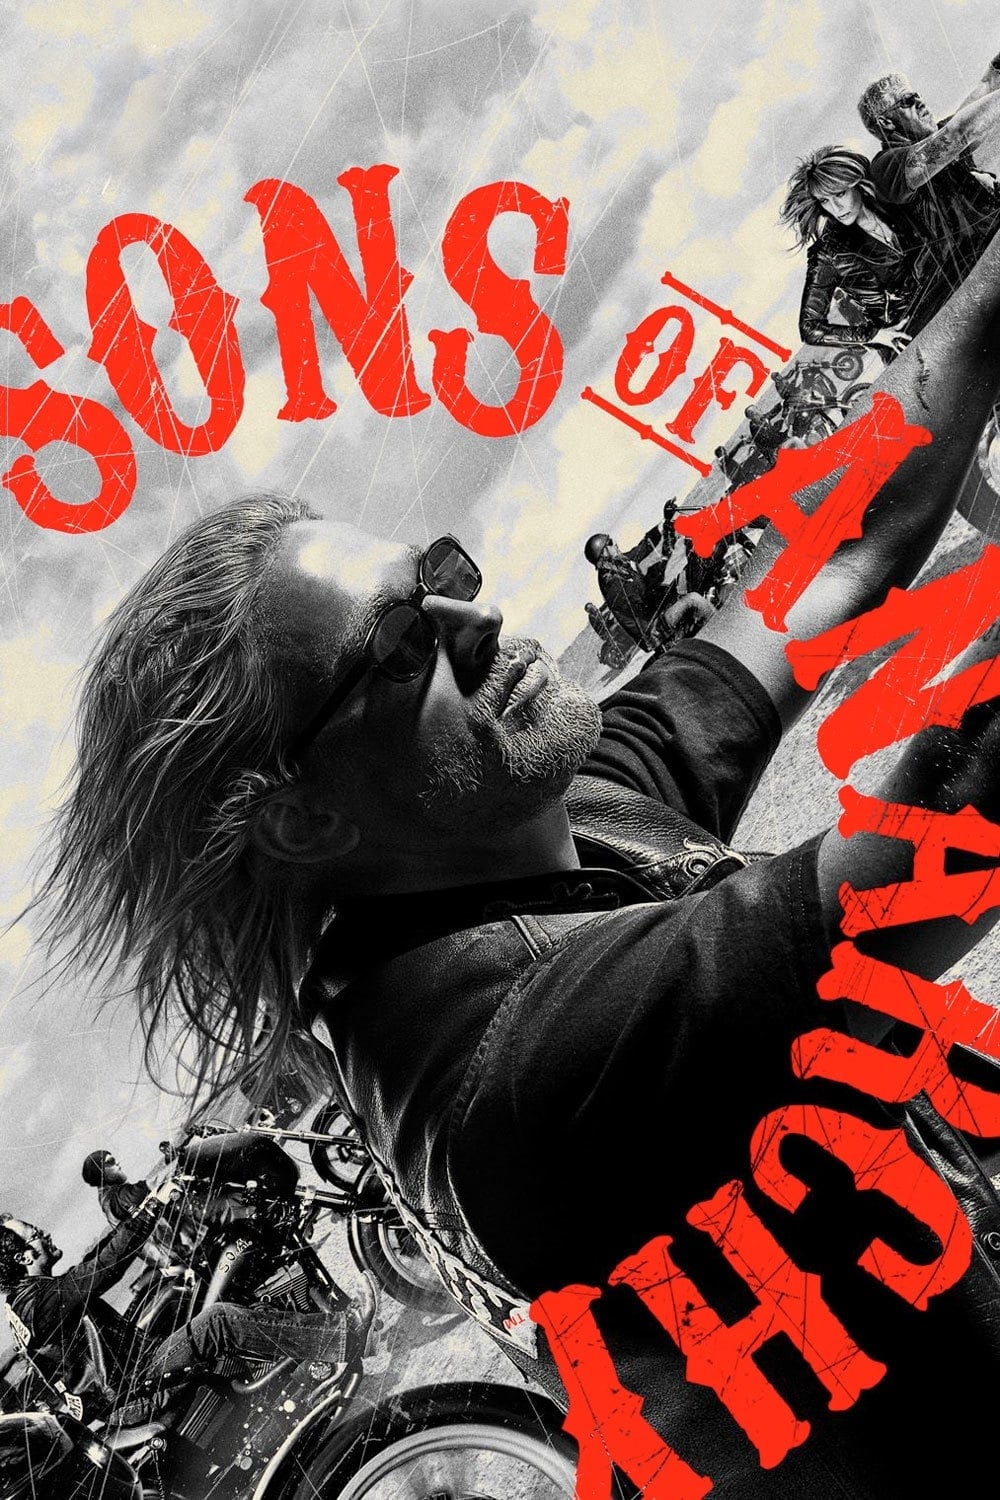 Sons of Anarchy (2008 - 2014) Seizoen 3 Disc 2 BD50